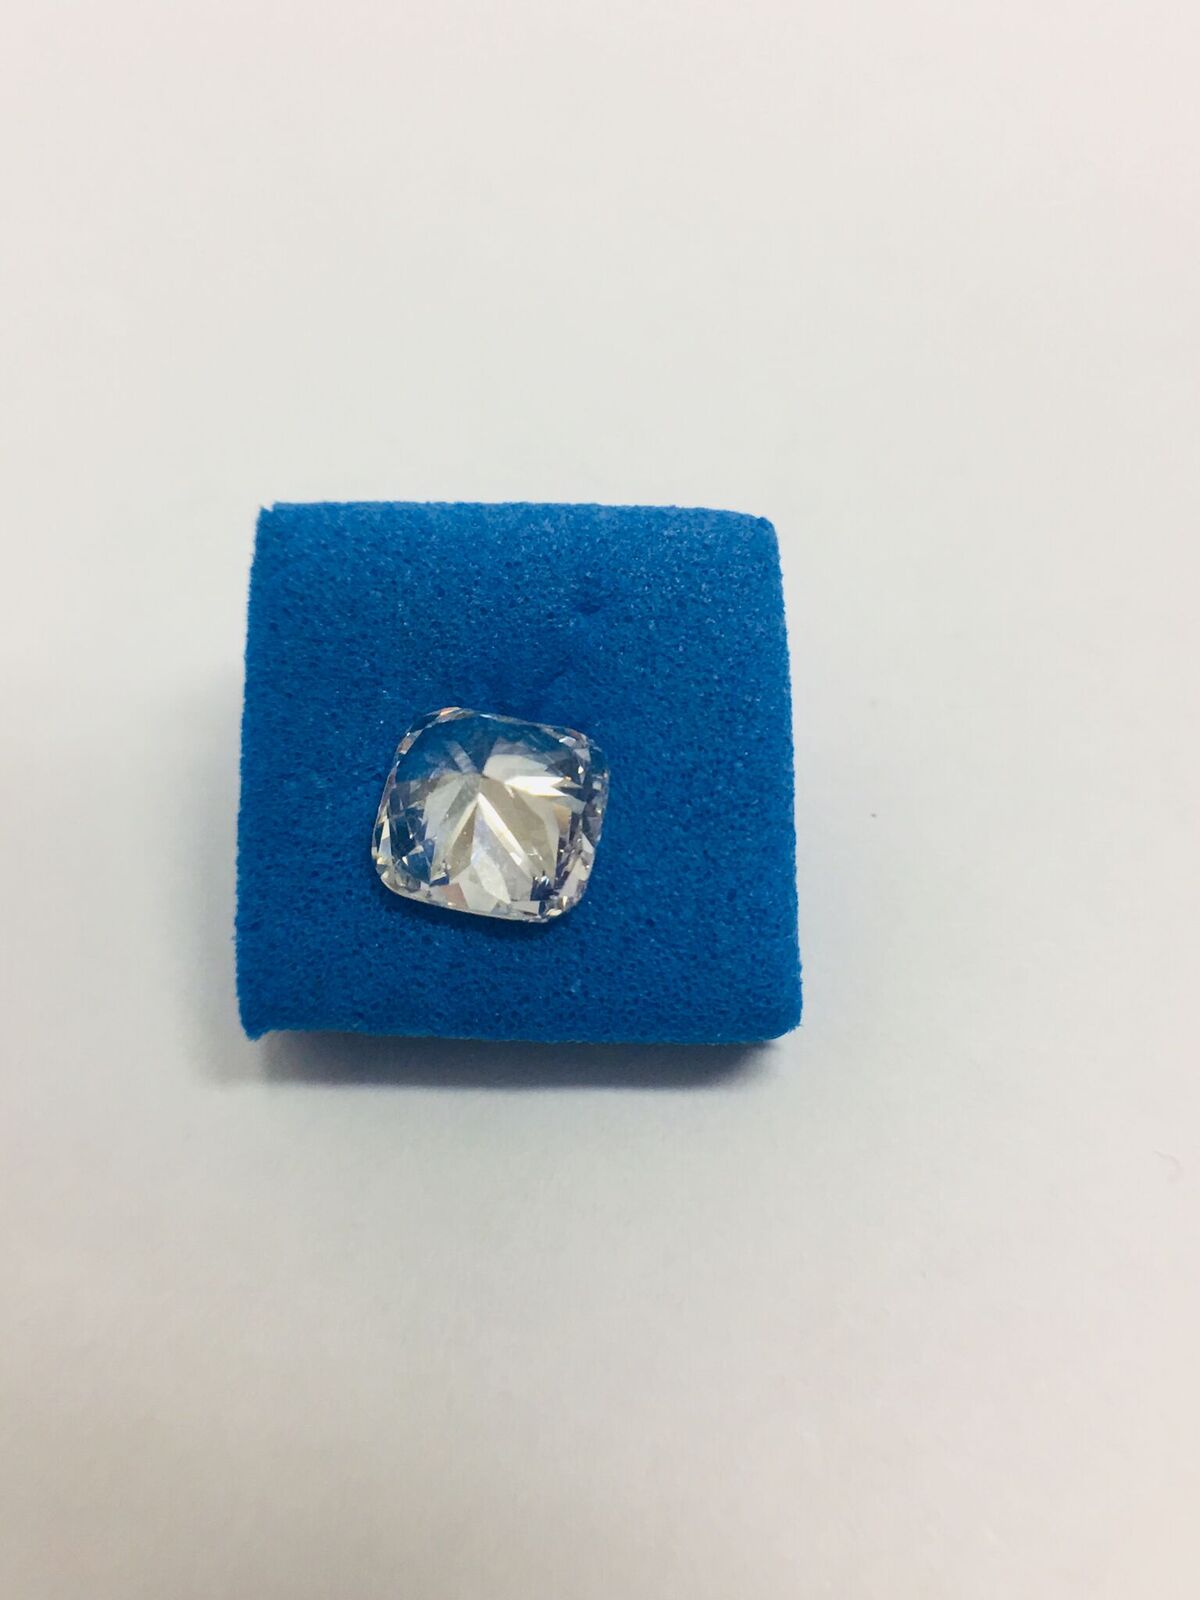 1.00ct cushion cut natural diamond - Image 14 of 14